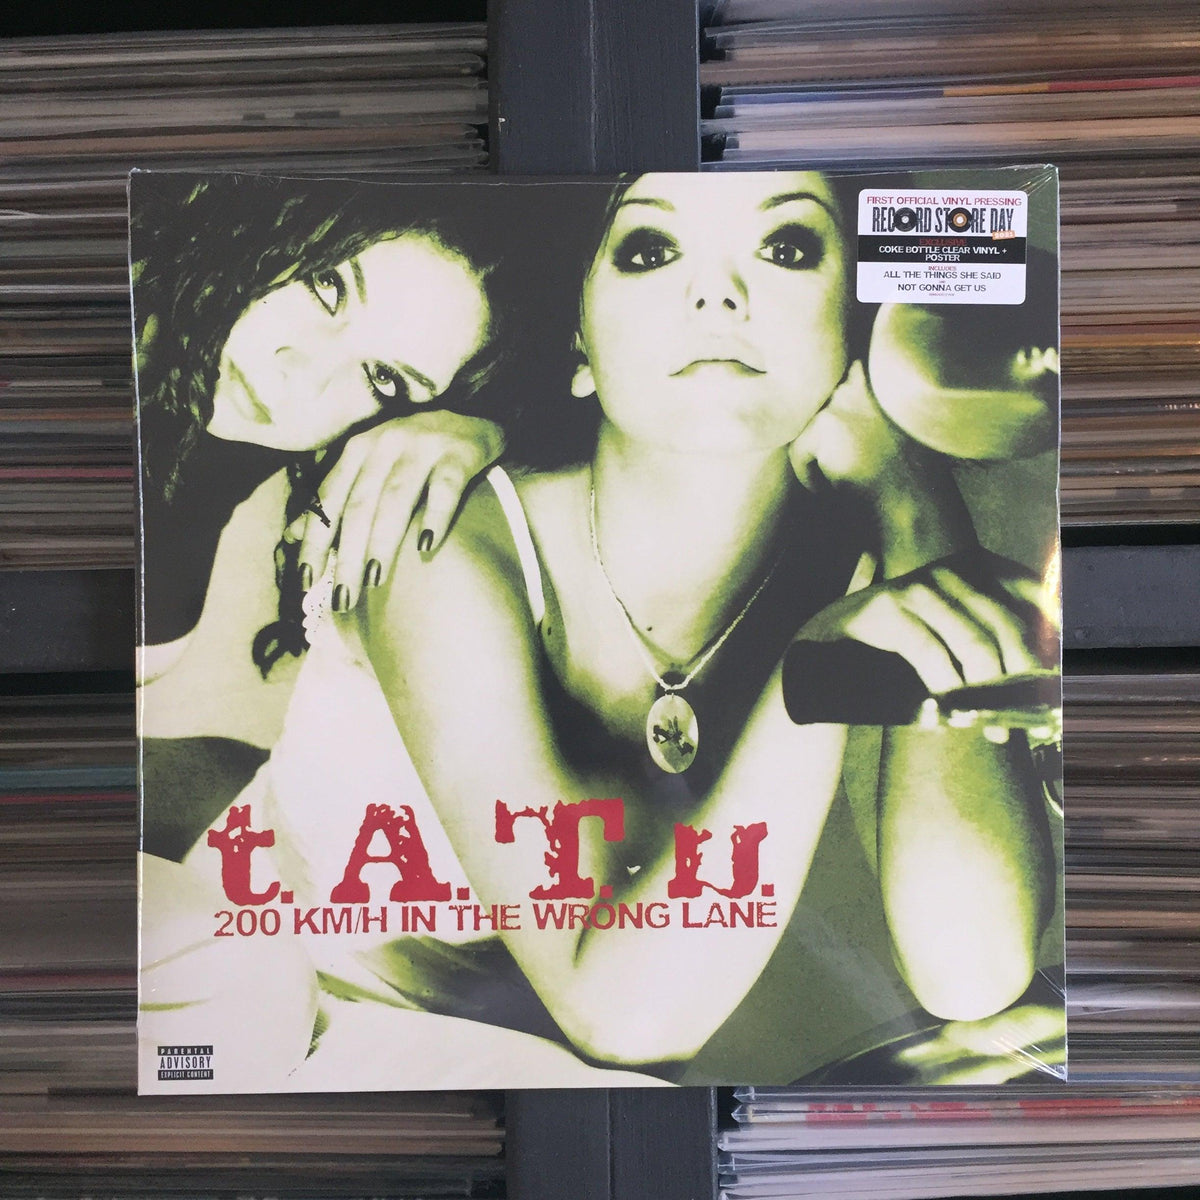 Shuraba Kreta Centralisere t.A.T.u. - 200 KM/H In the Wrong Lane - Vinyl LP — Released Records